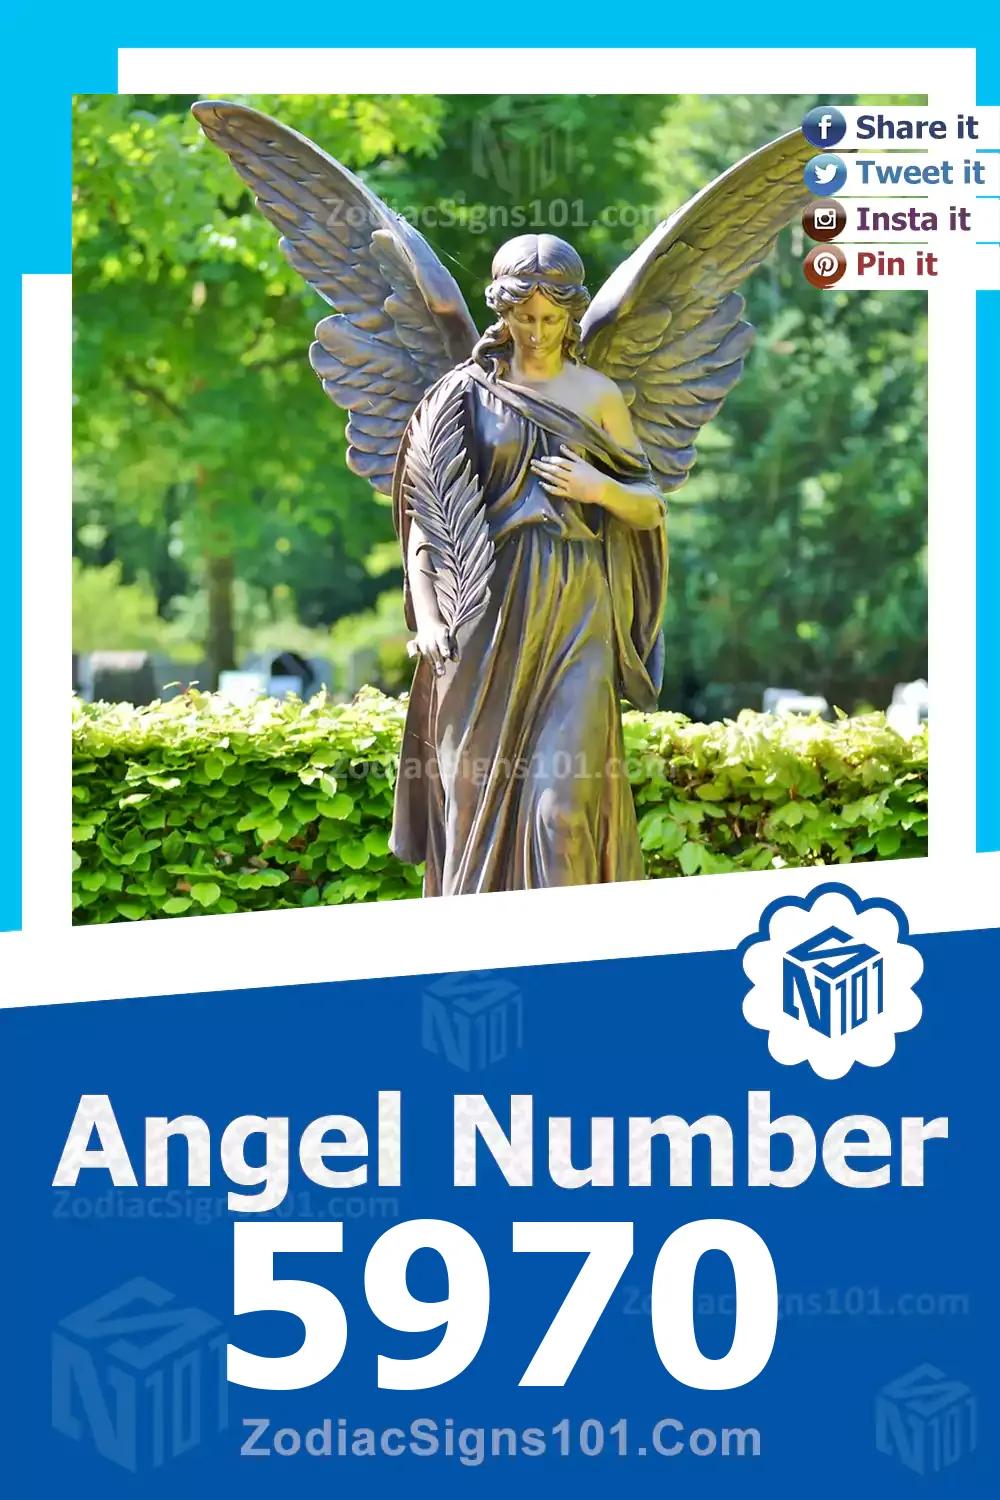 5970-Angel-Number-Meaning.jpg